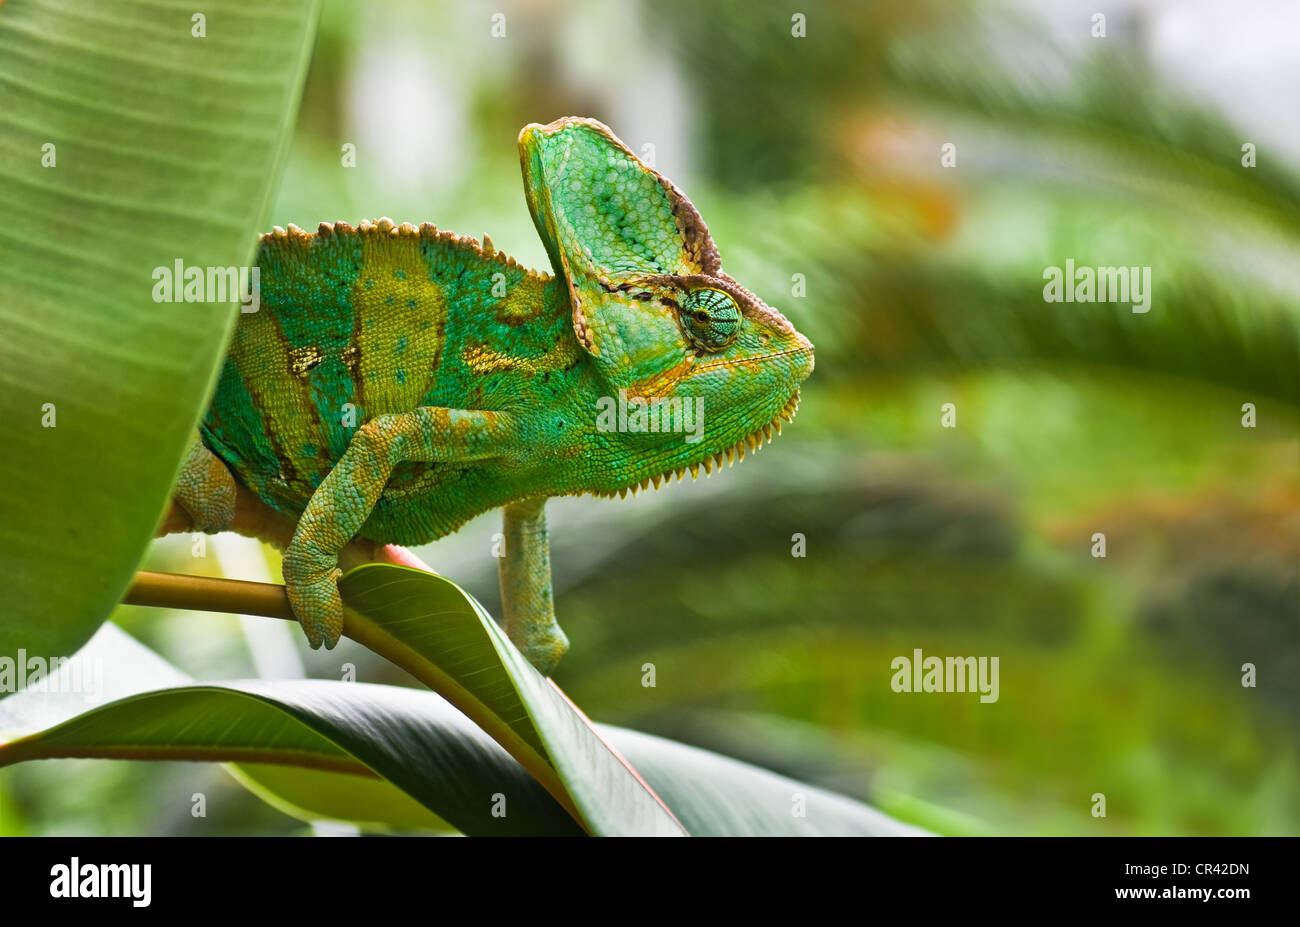 Green Jemenchameleon or Chamaelio calyptratus climbing a tree Stock Photo